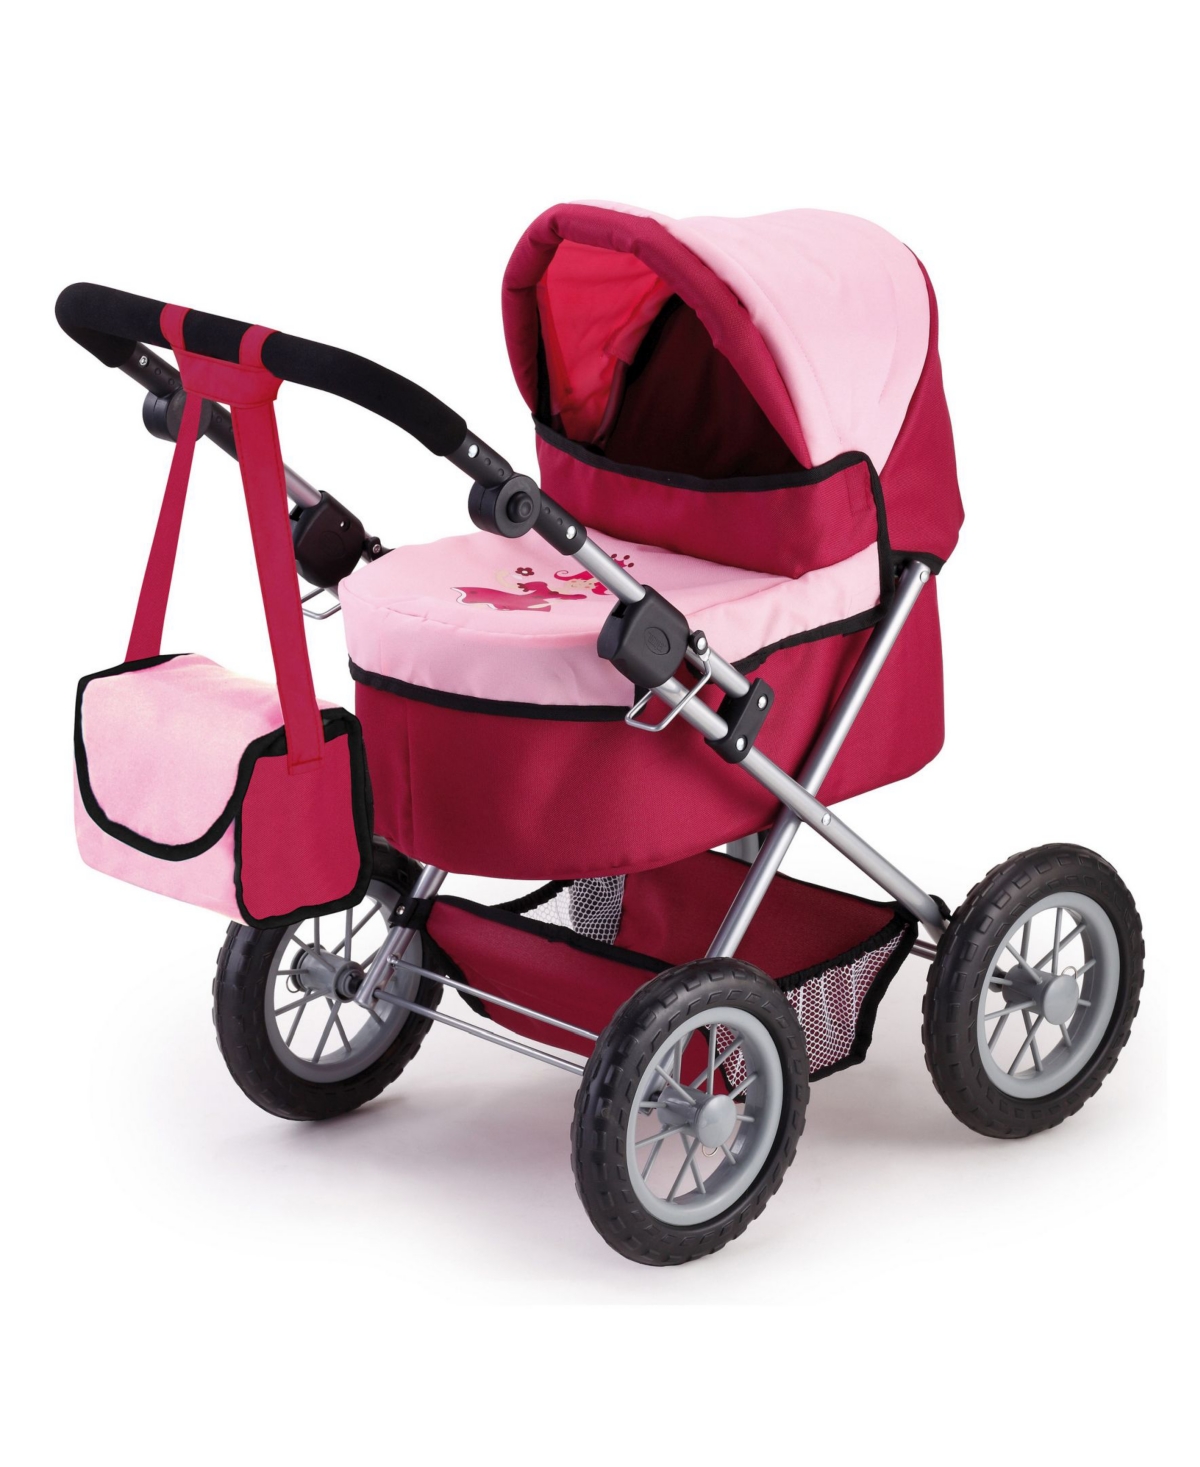 Redbox Bayer Design Trendy Pram Baby Doll Stroller For Toy Baby Dolls In Red,pink